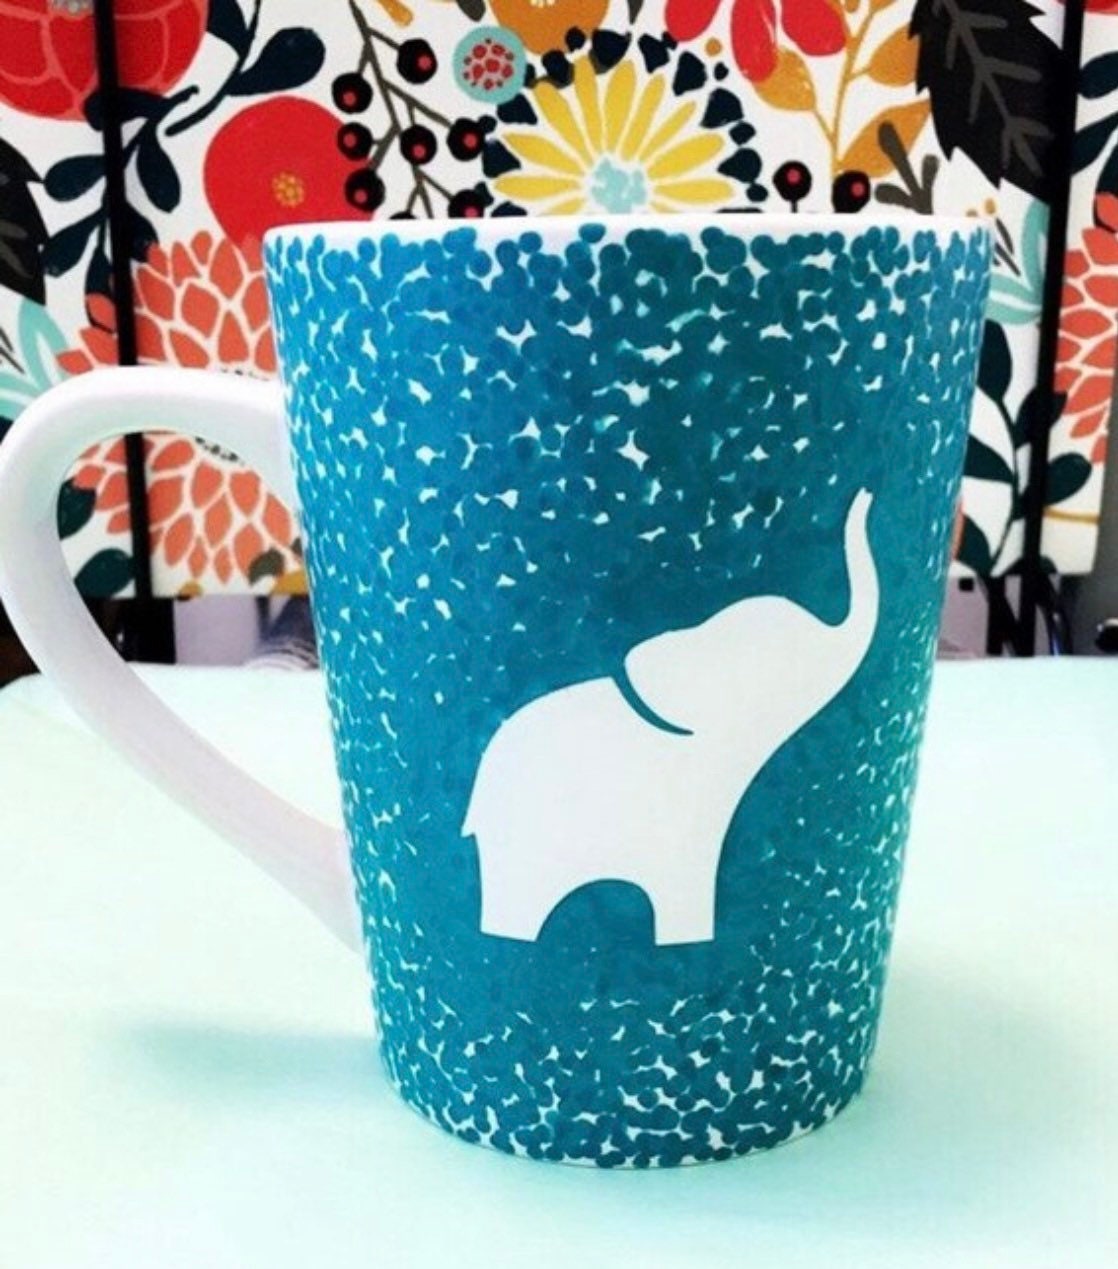 Elephant Mandala Mug, Elephant Coffee Mug, Elephant Yoga Mug